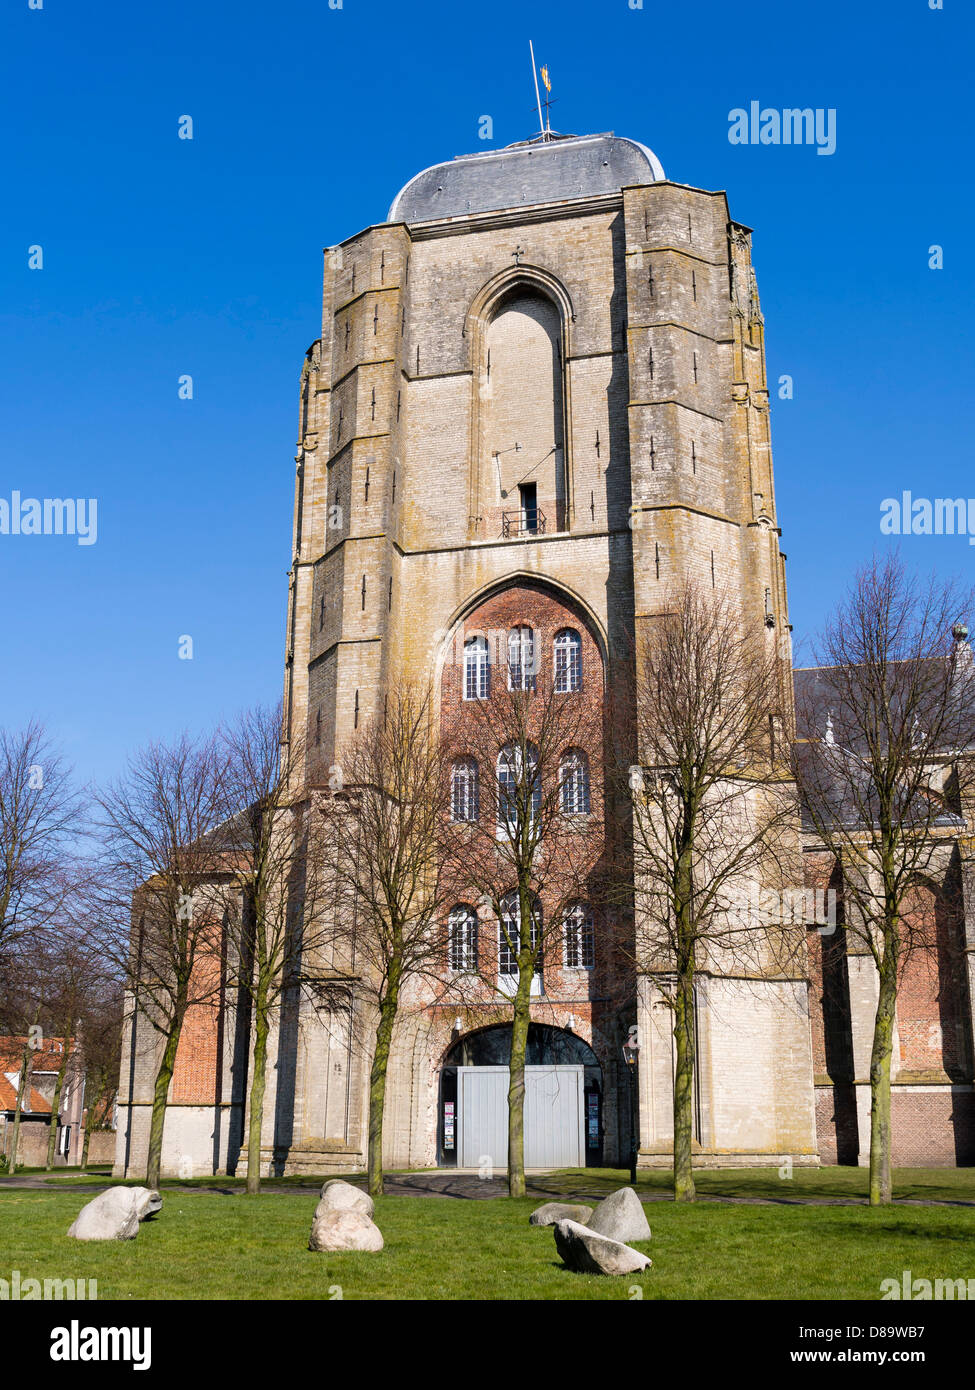 The church Onze Lieve Vrouwekerk, also called Grote Kerk, in Veere. Stock Photo